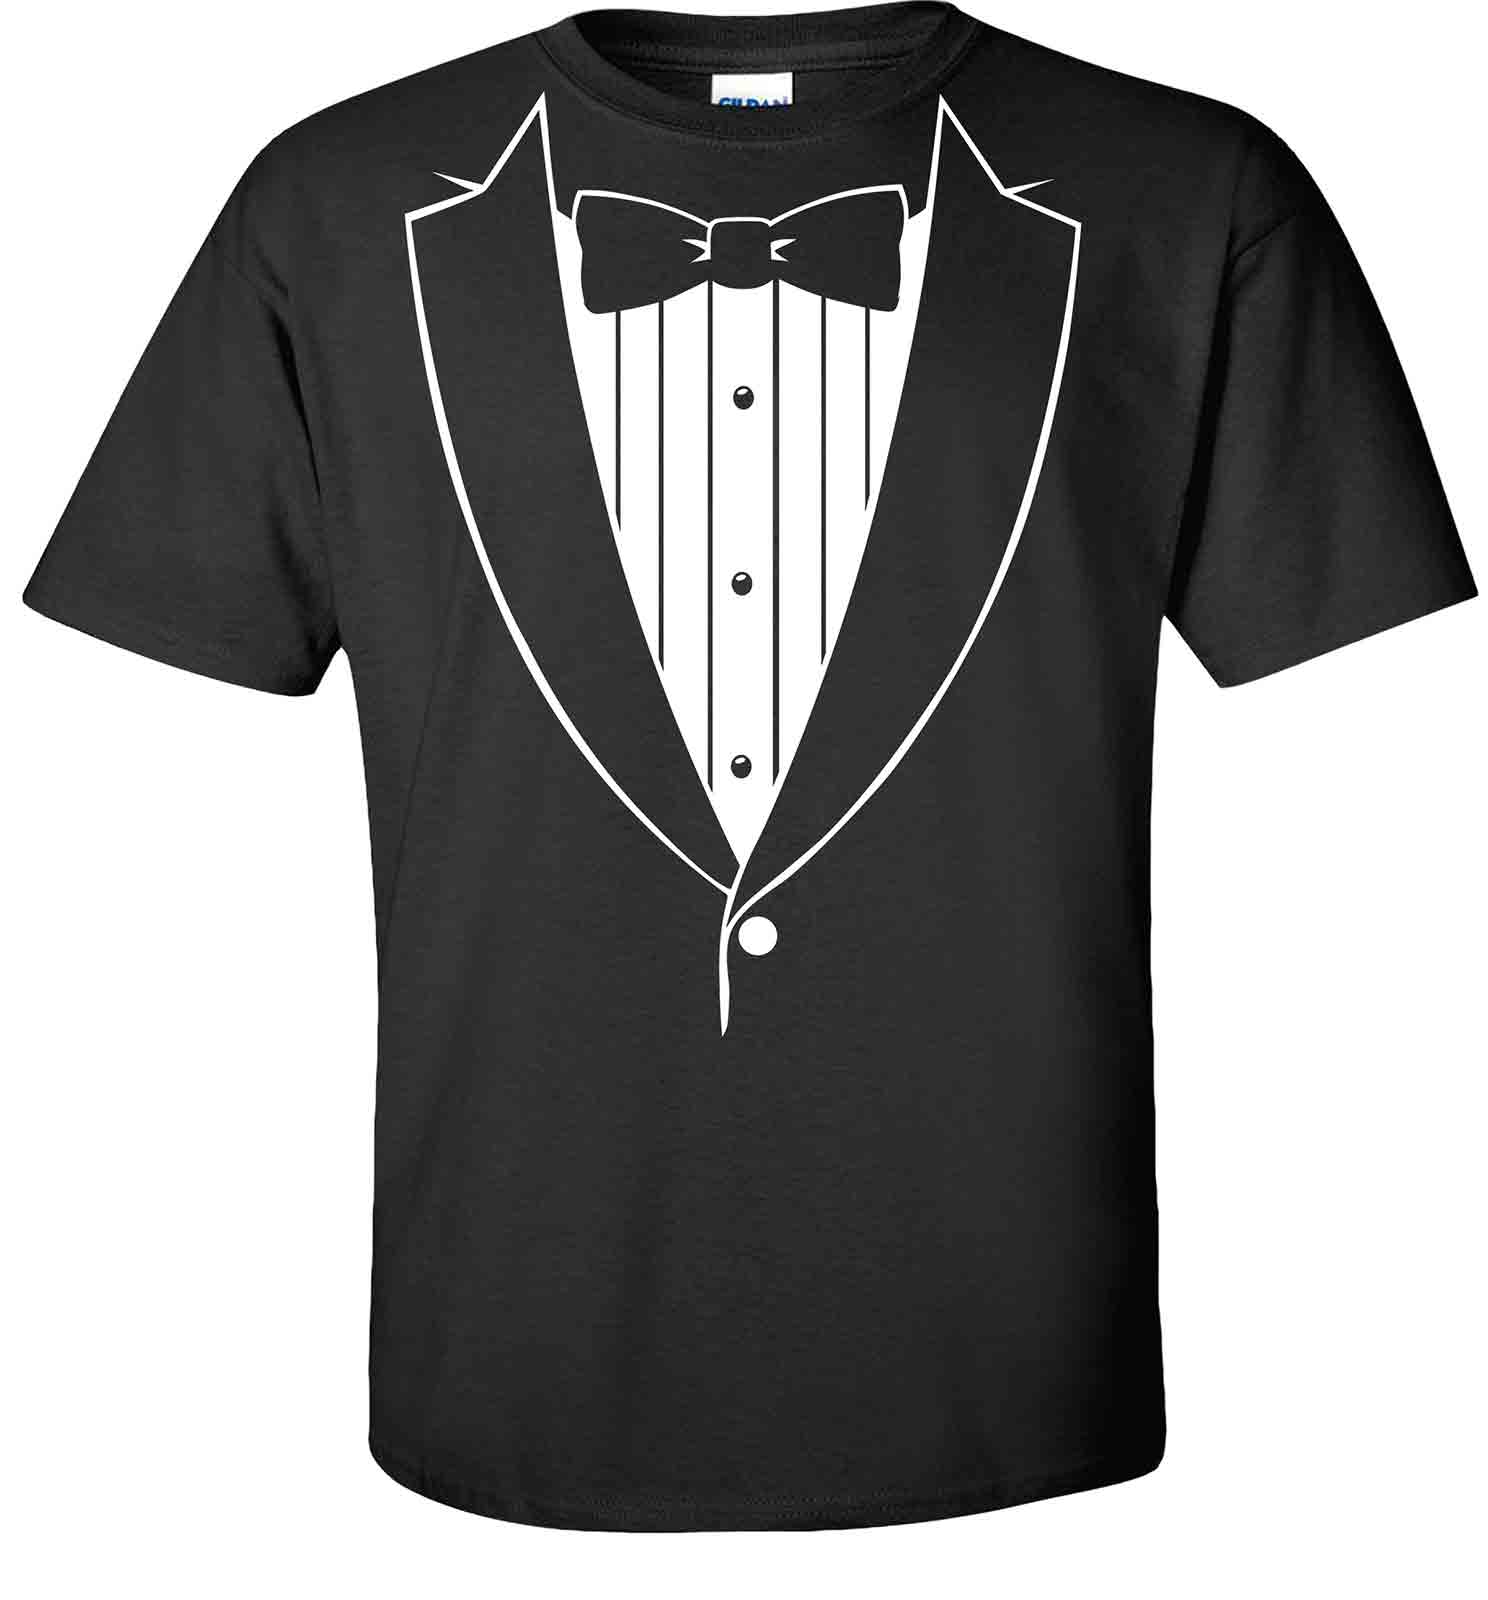 tuxedo-t-shirt-bow-tie-black.jpg